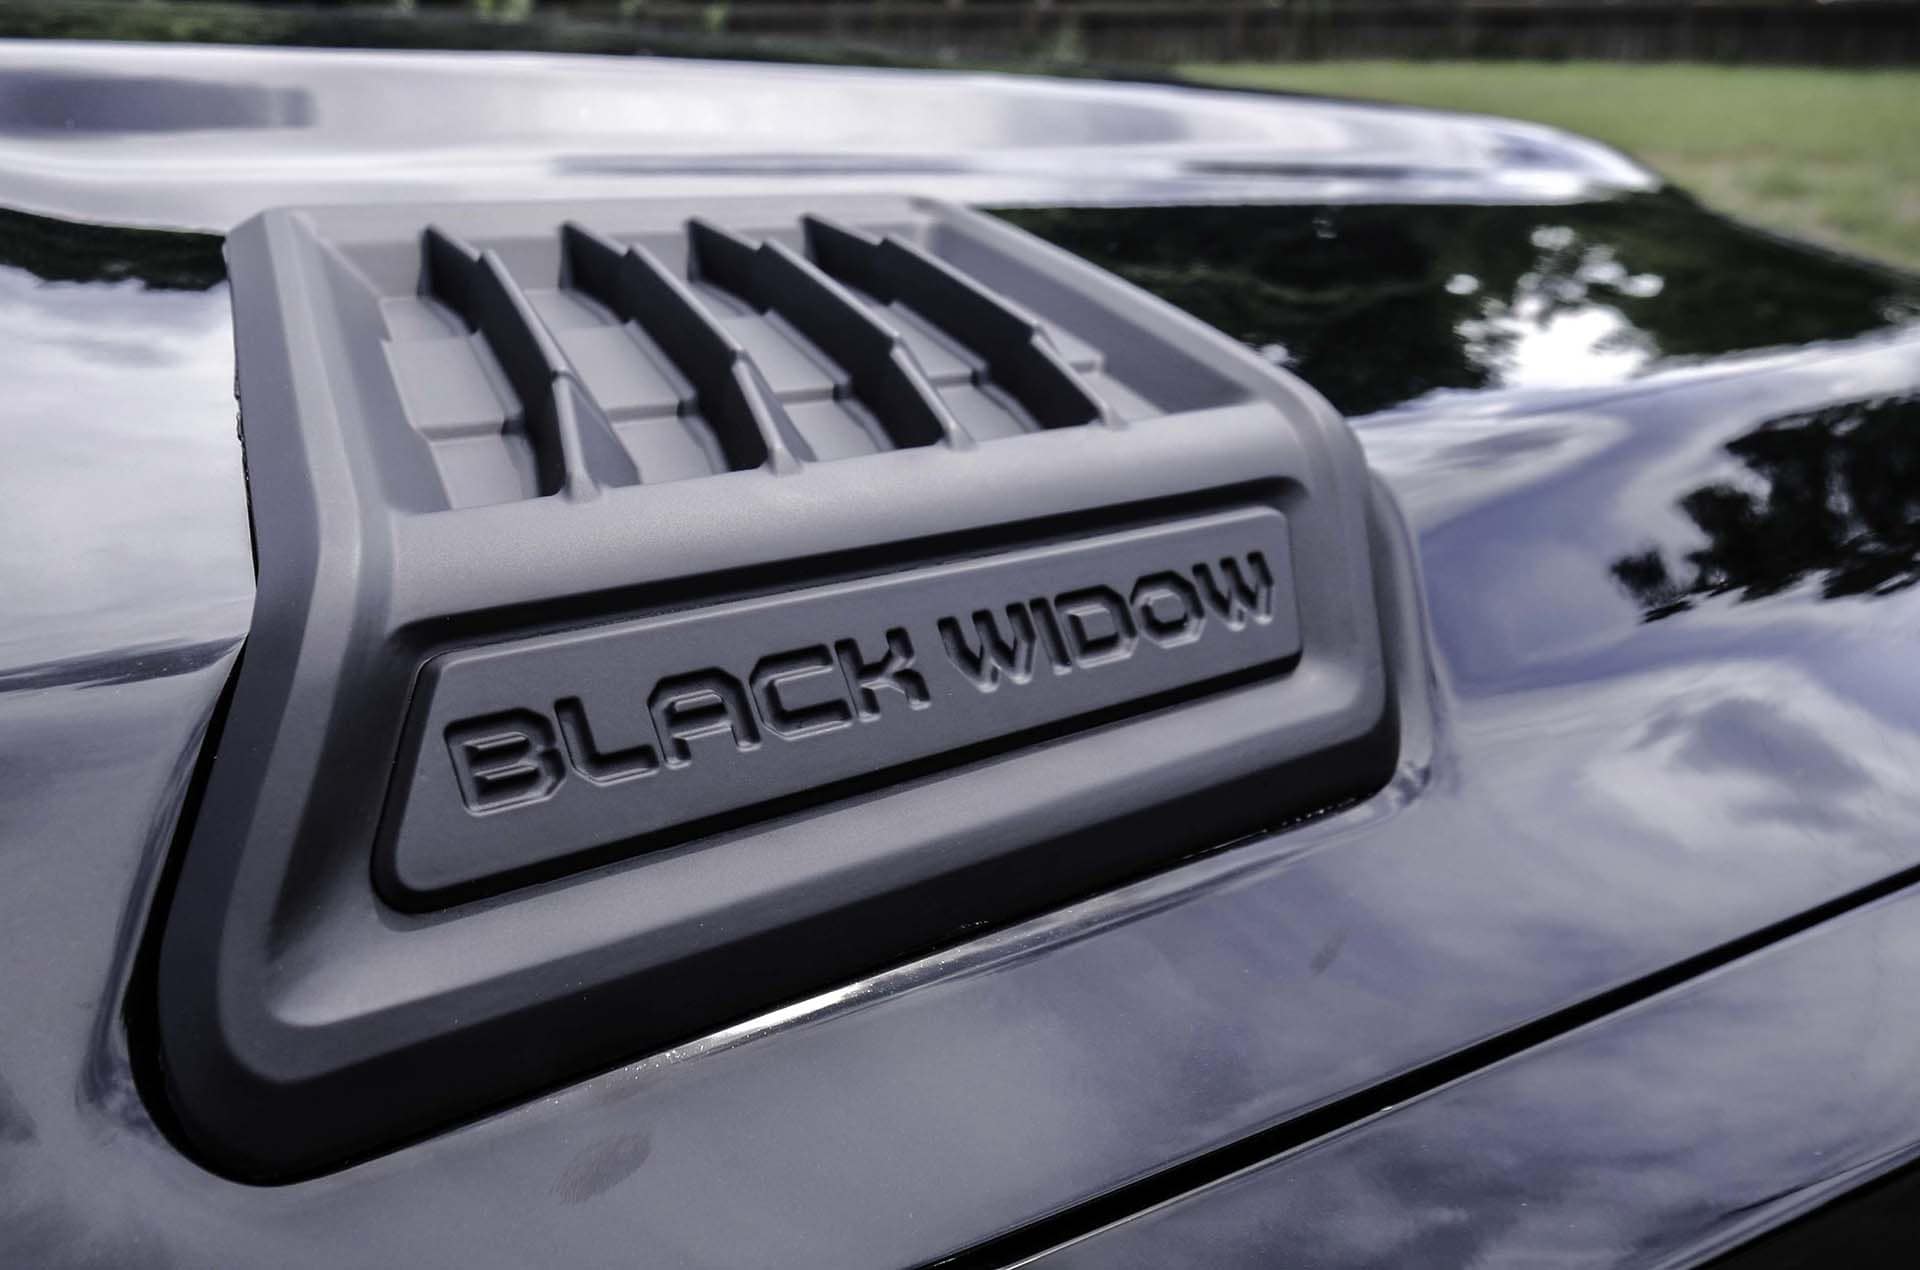 SCA RAM 1500 Black Widow Truck Hood Branding.